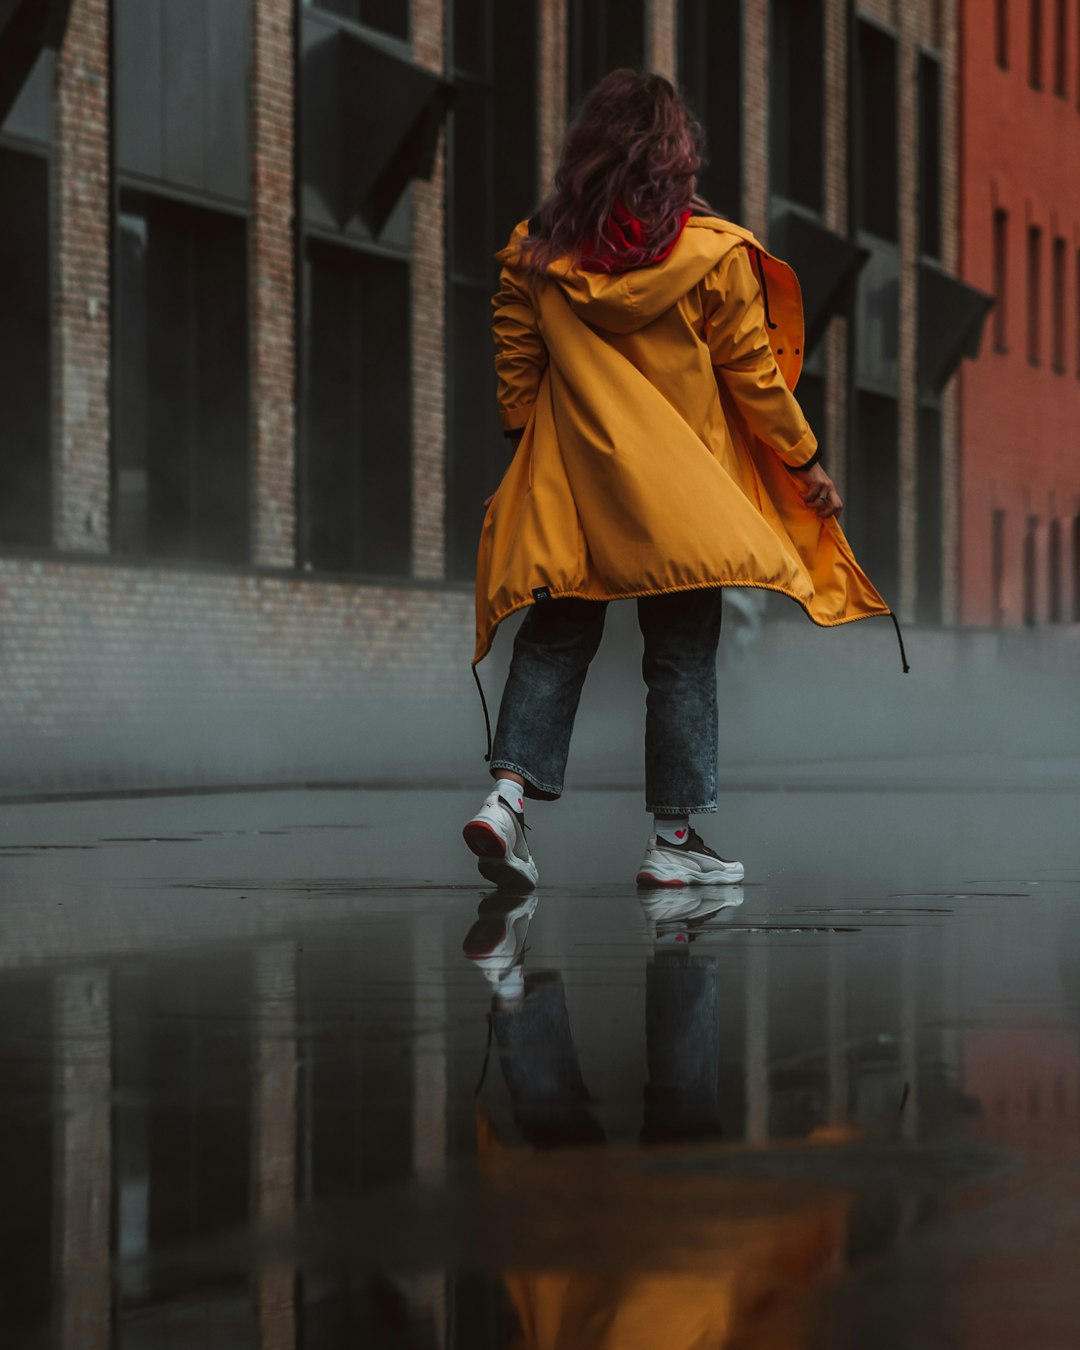 woman in yellow coat walking on street during daytime